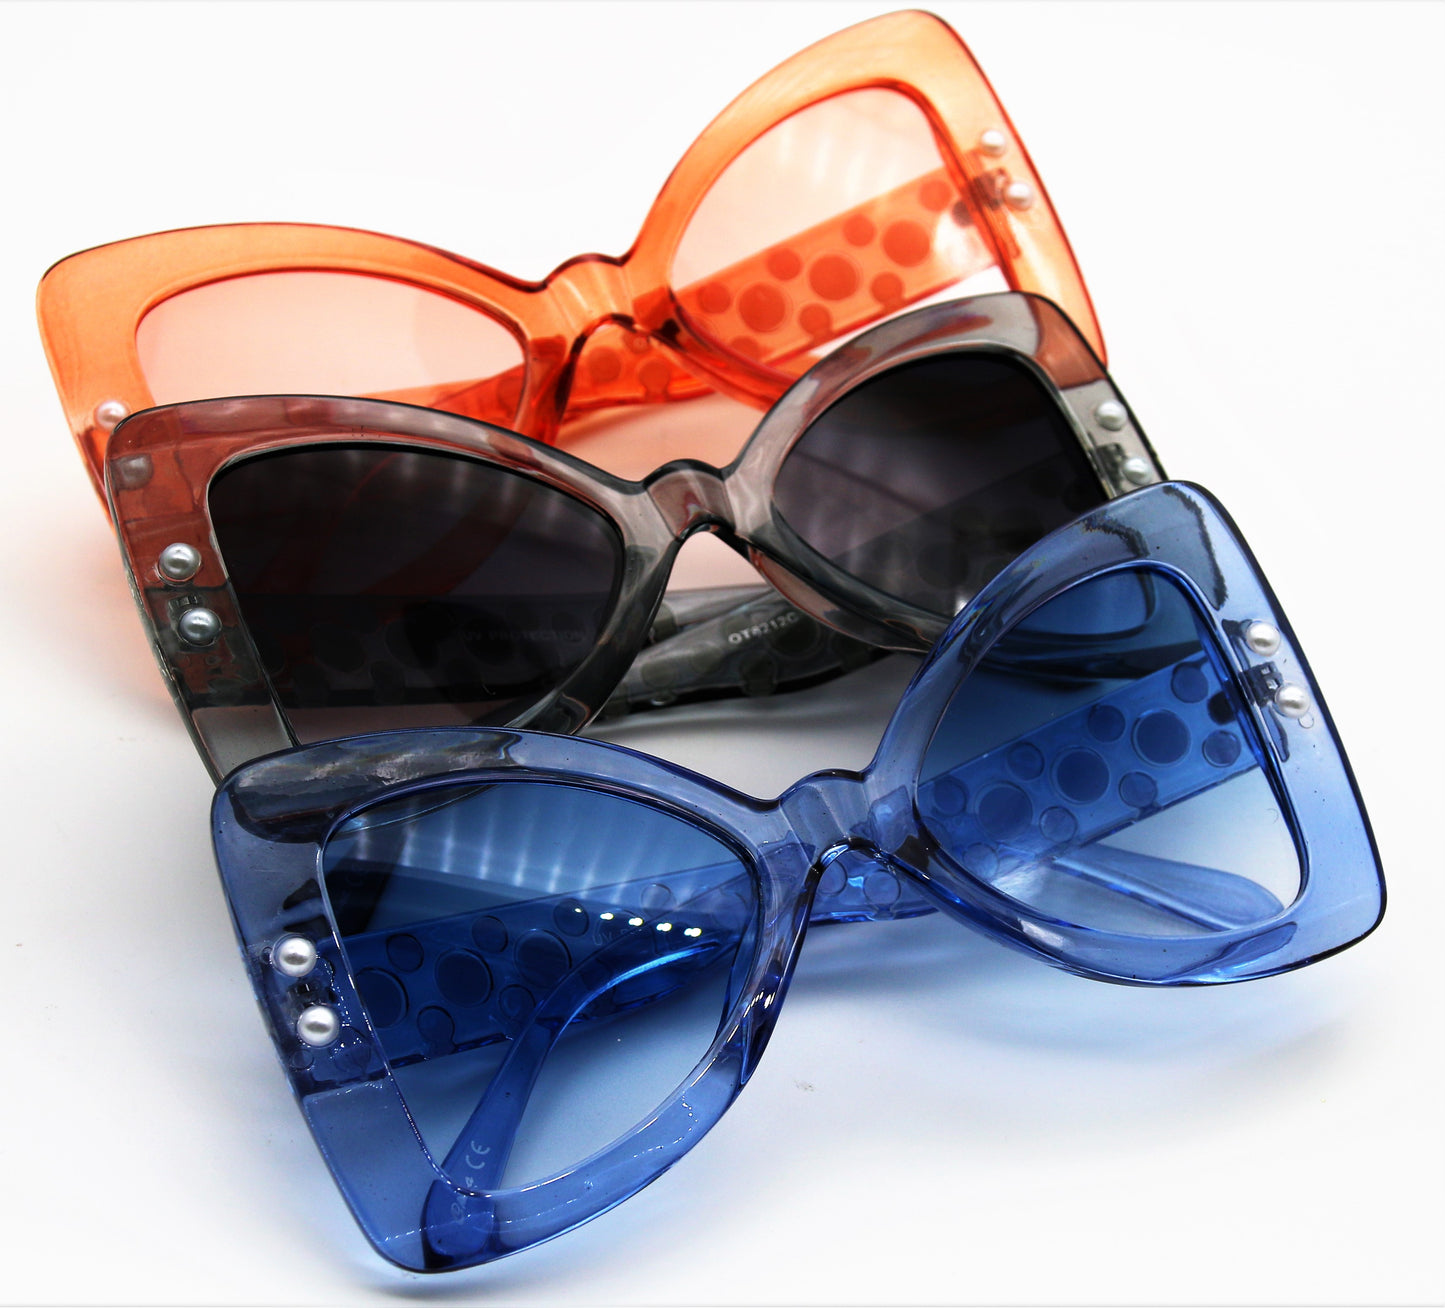 Aqua Blue Sunglasses With Faux Pearls